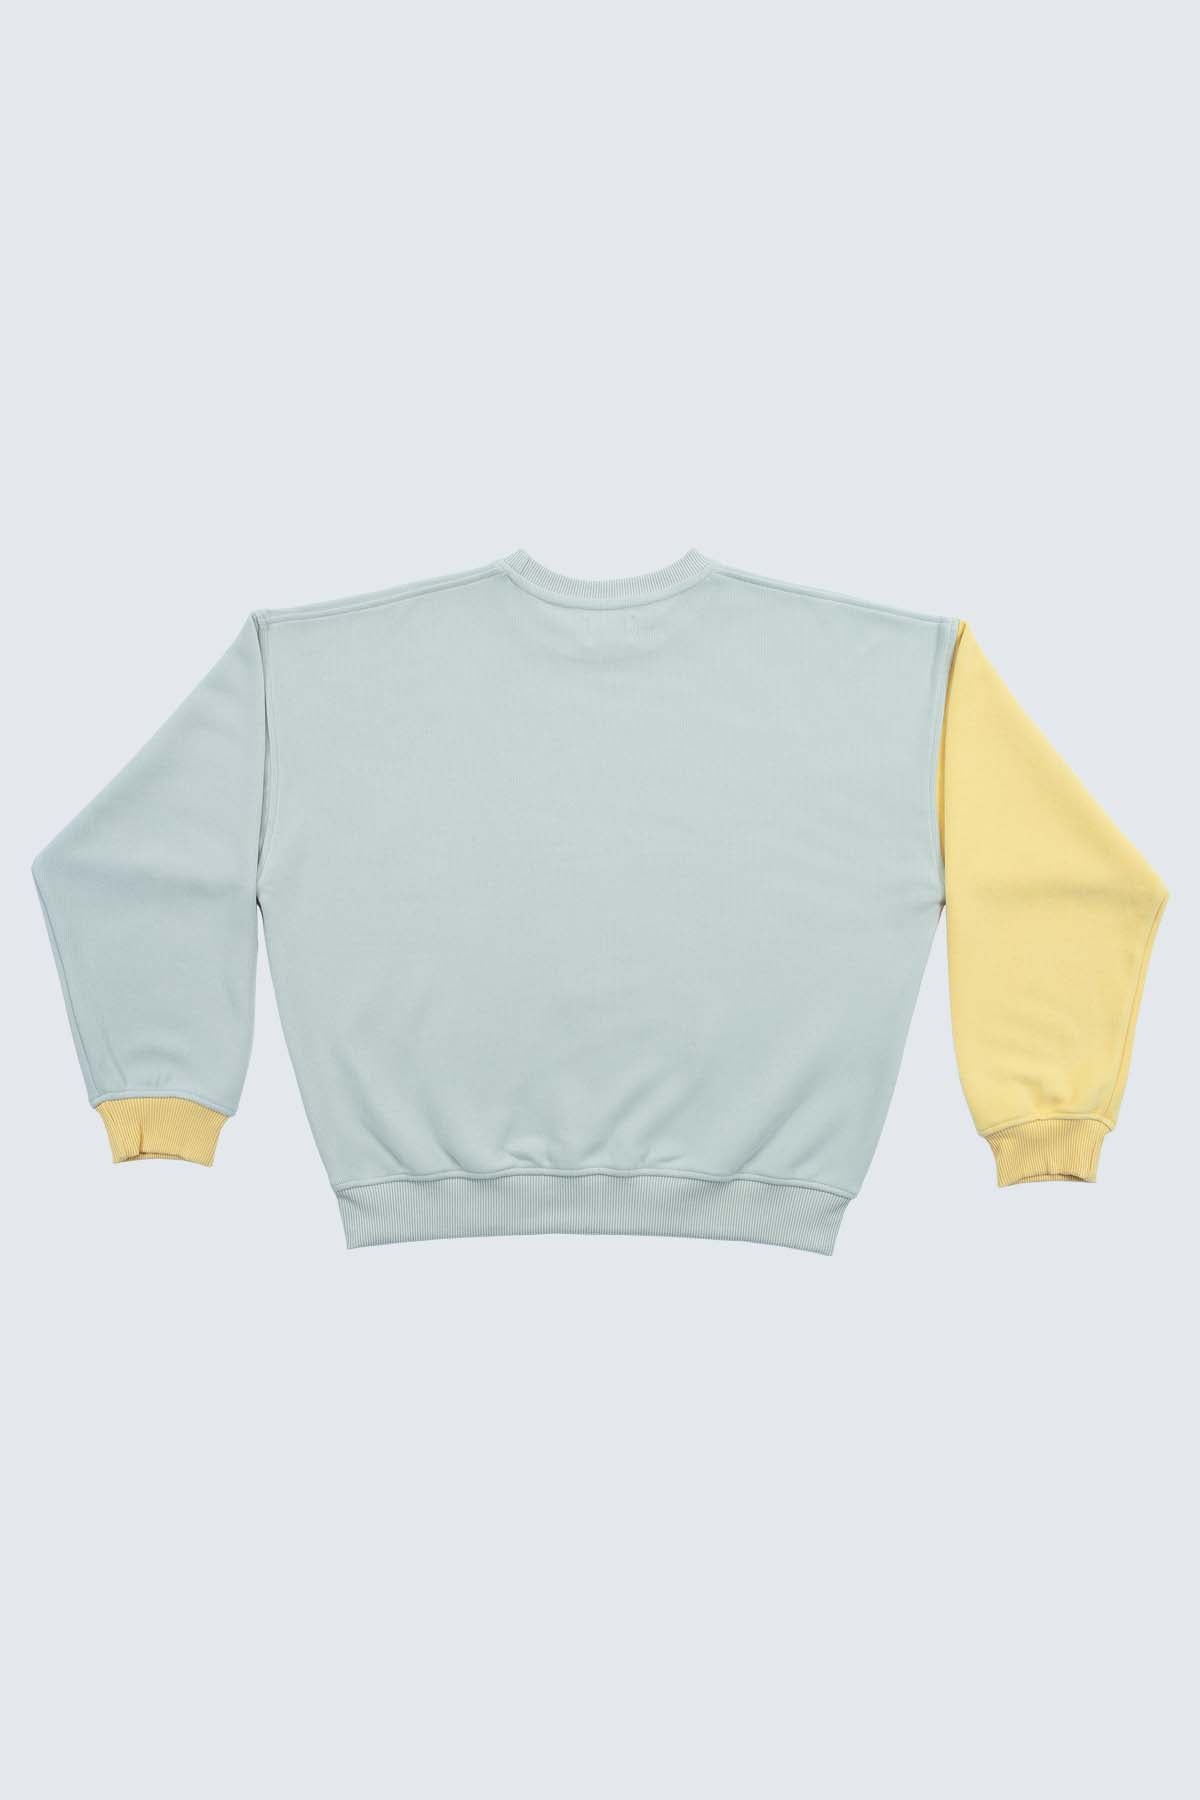 Matching Sweatshirt - Stone Grey/Pale Yellow